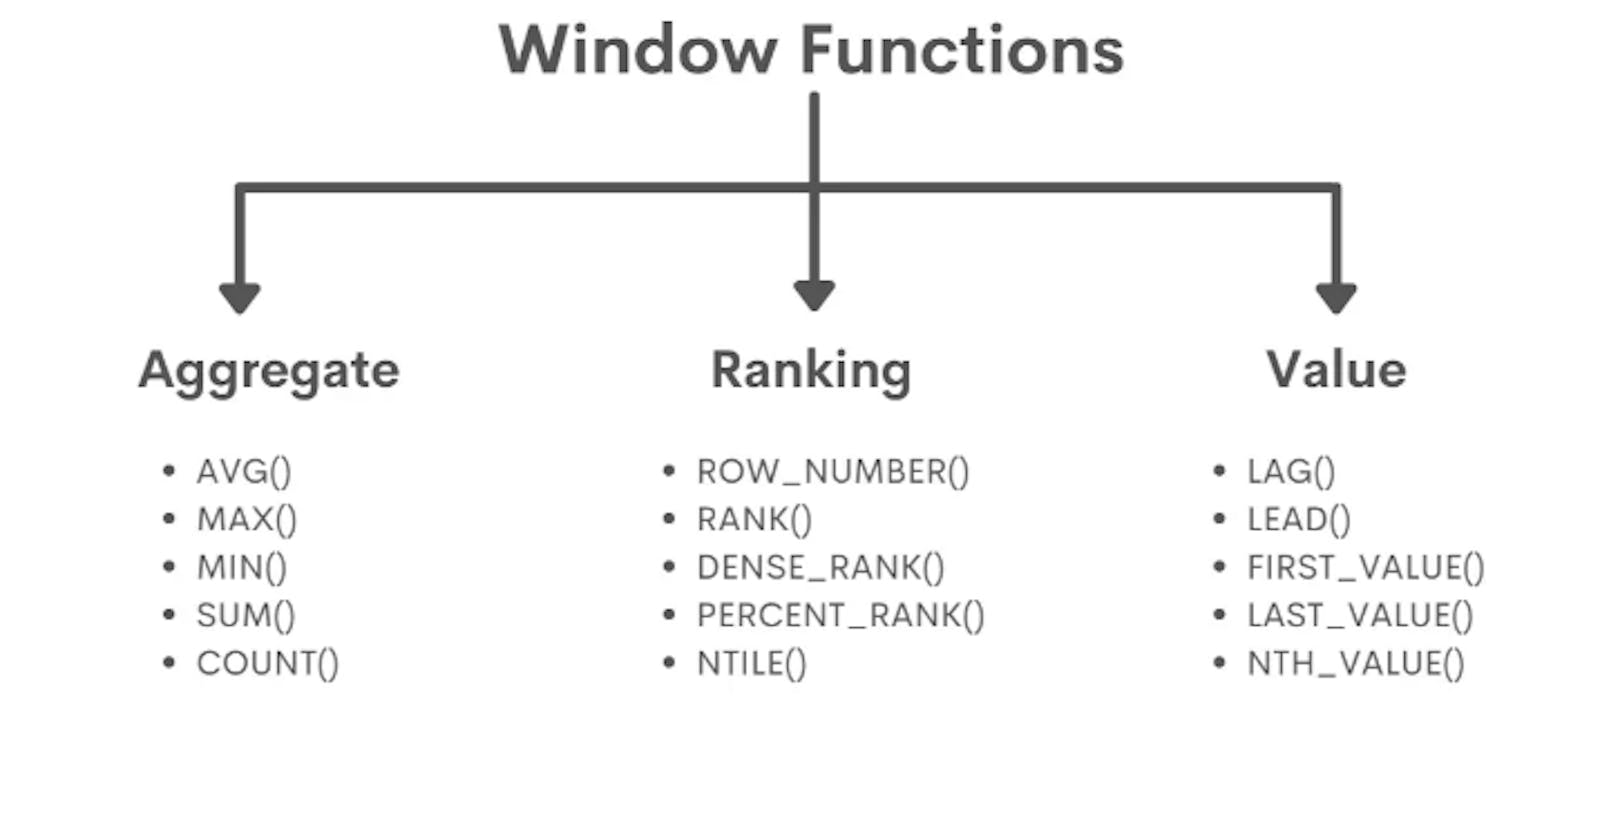 Window Functions in SQL